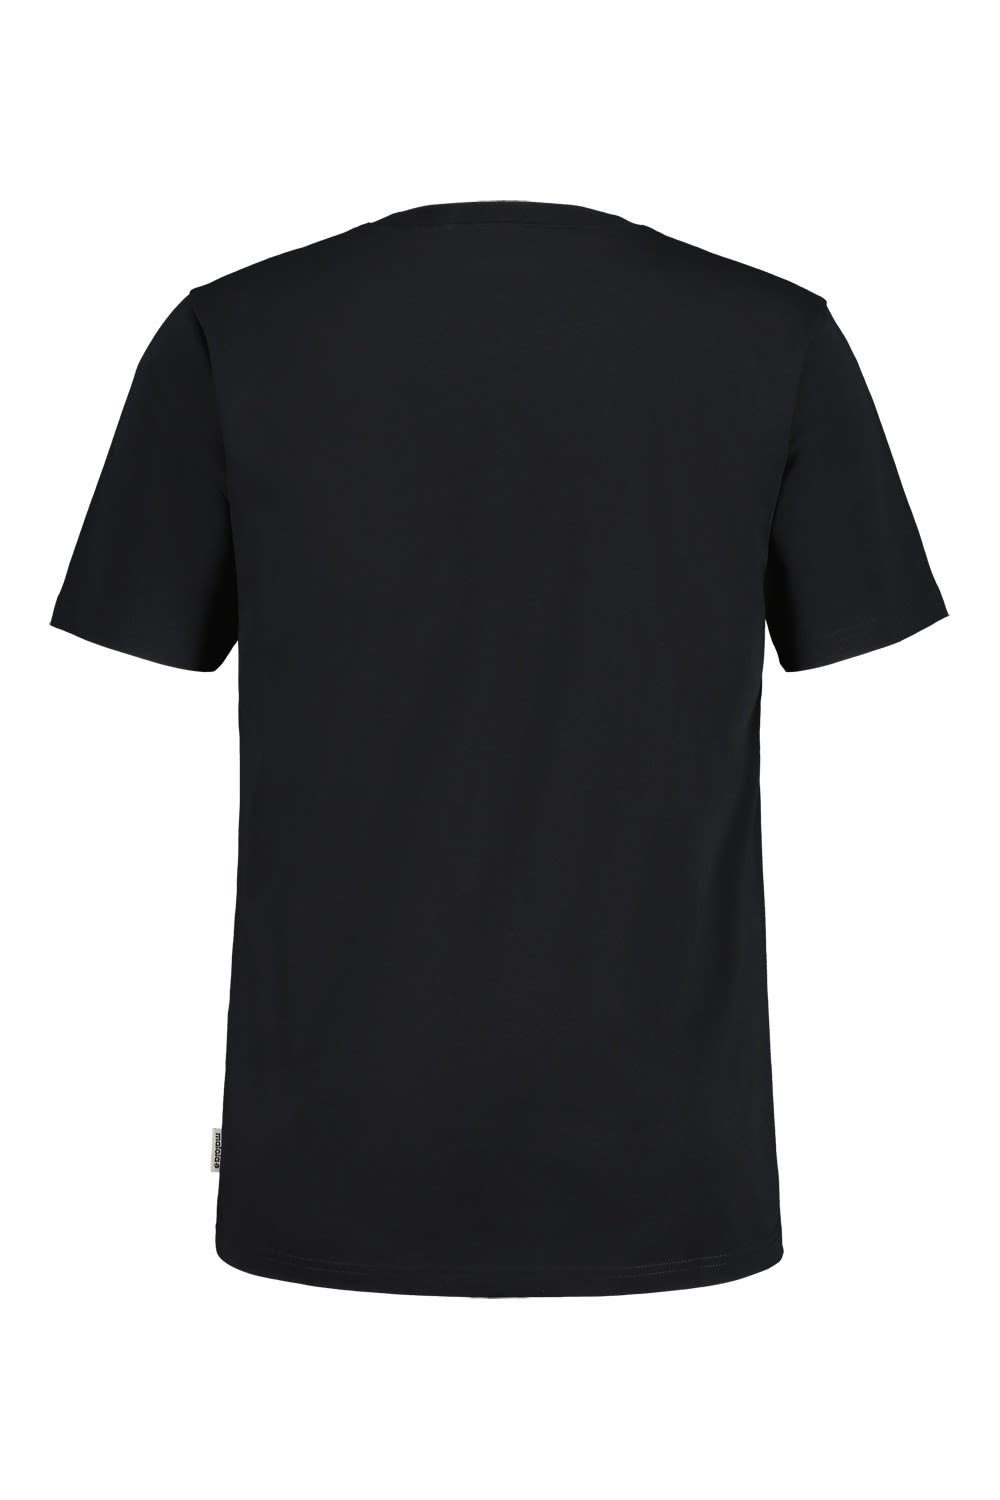 Maloja Maloja Patteriolm. T-Shirt Moonless Kurzarm-Shirt Herren M T-shirt